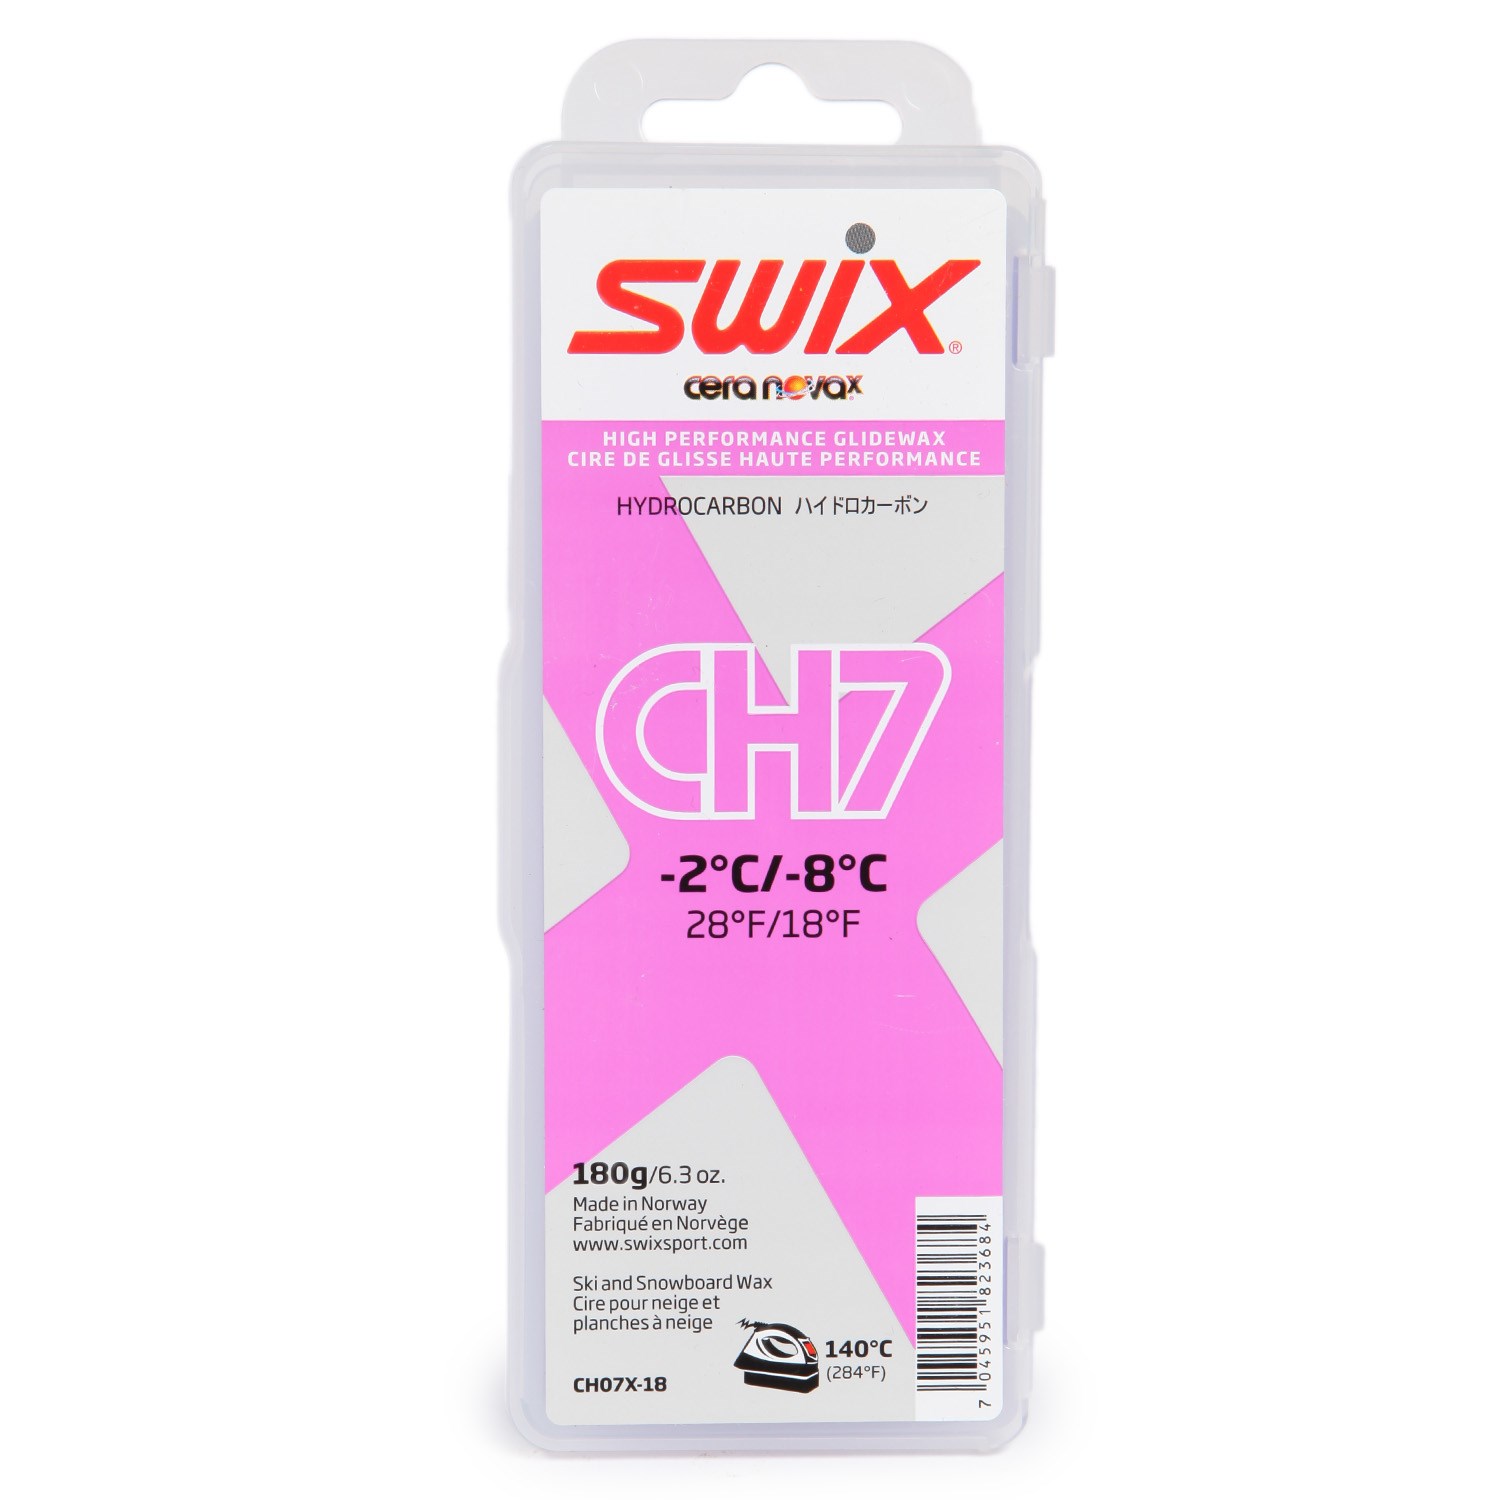 180g Purple Swix CH7 Wax -2°C/-8°C 